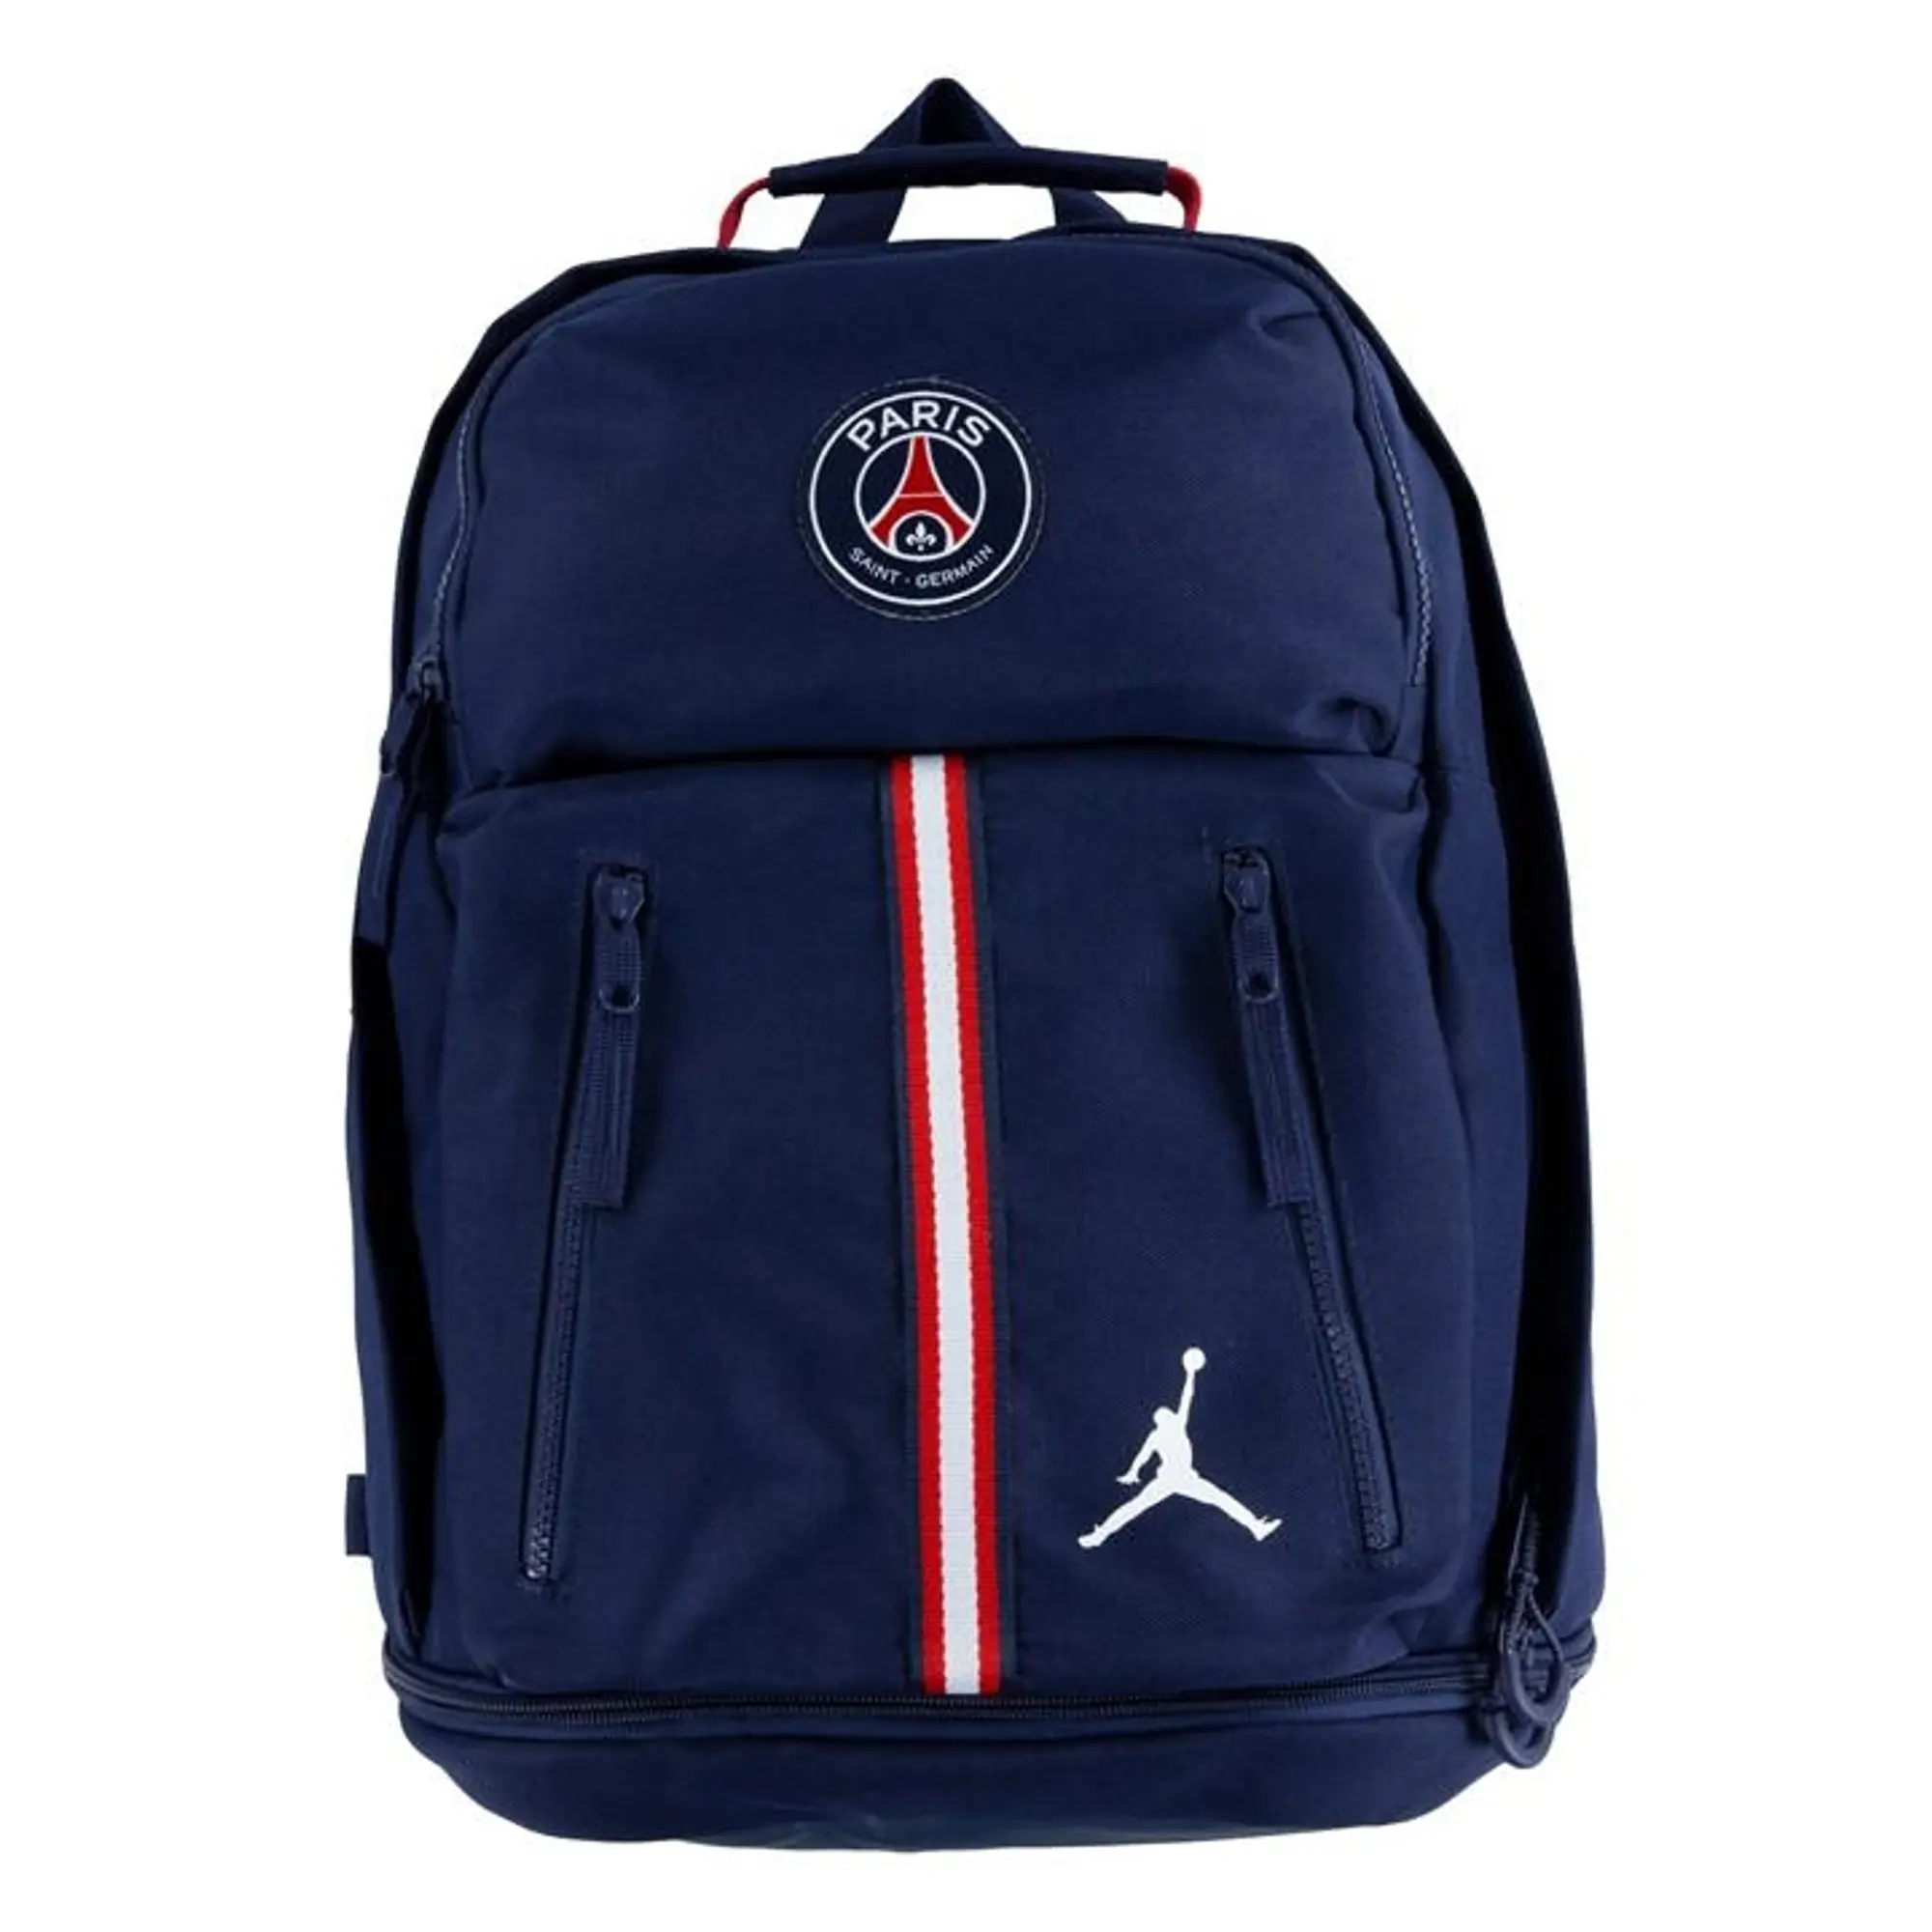 Nike Jordan Air Jordan PSG Backpack - Blue